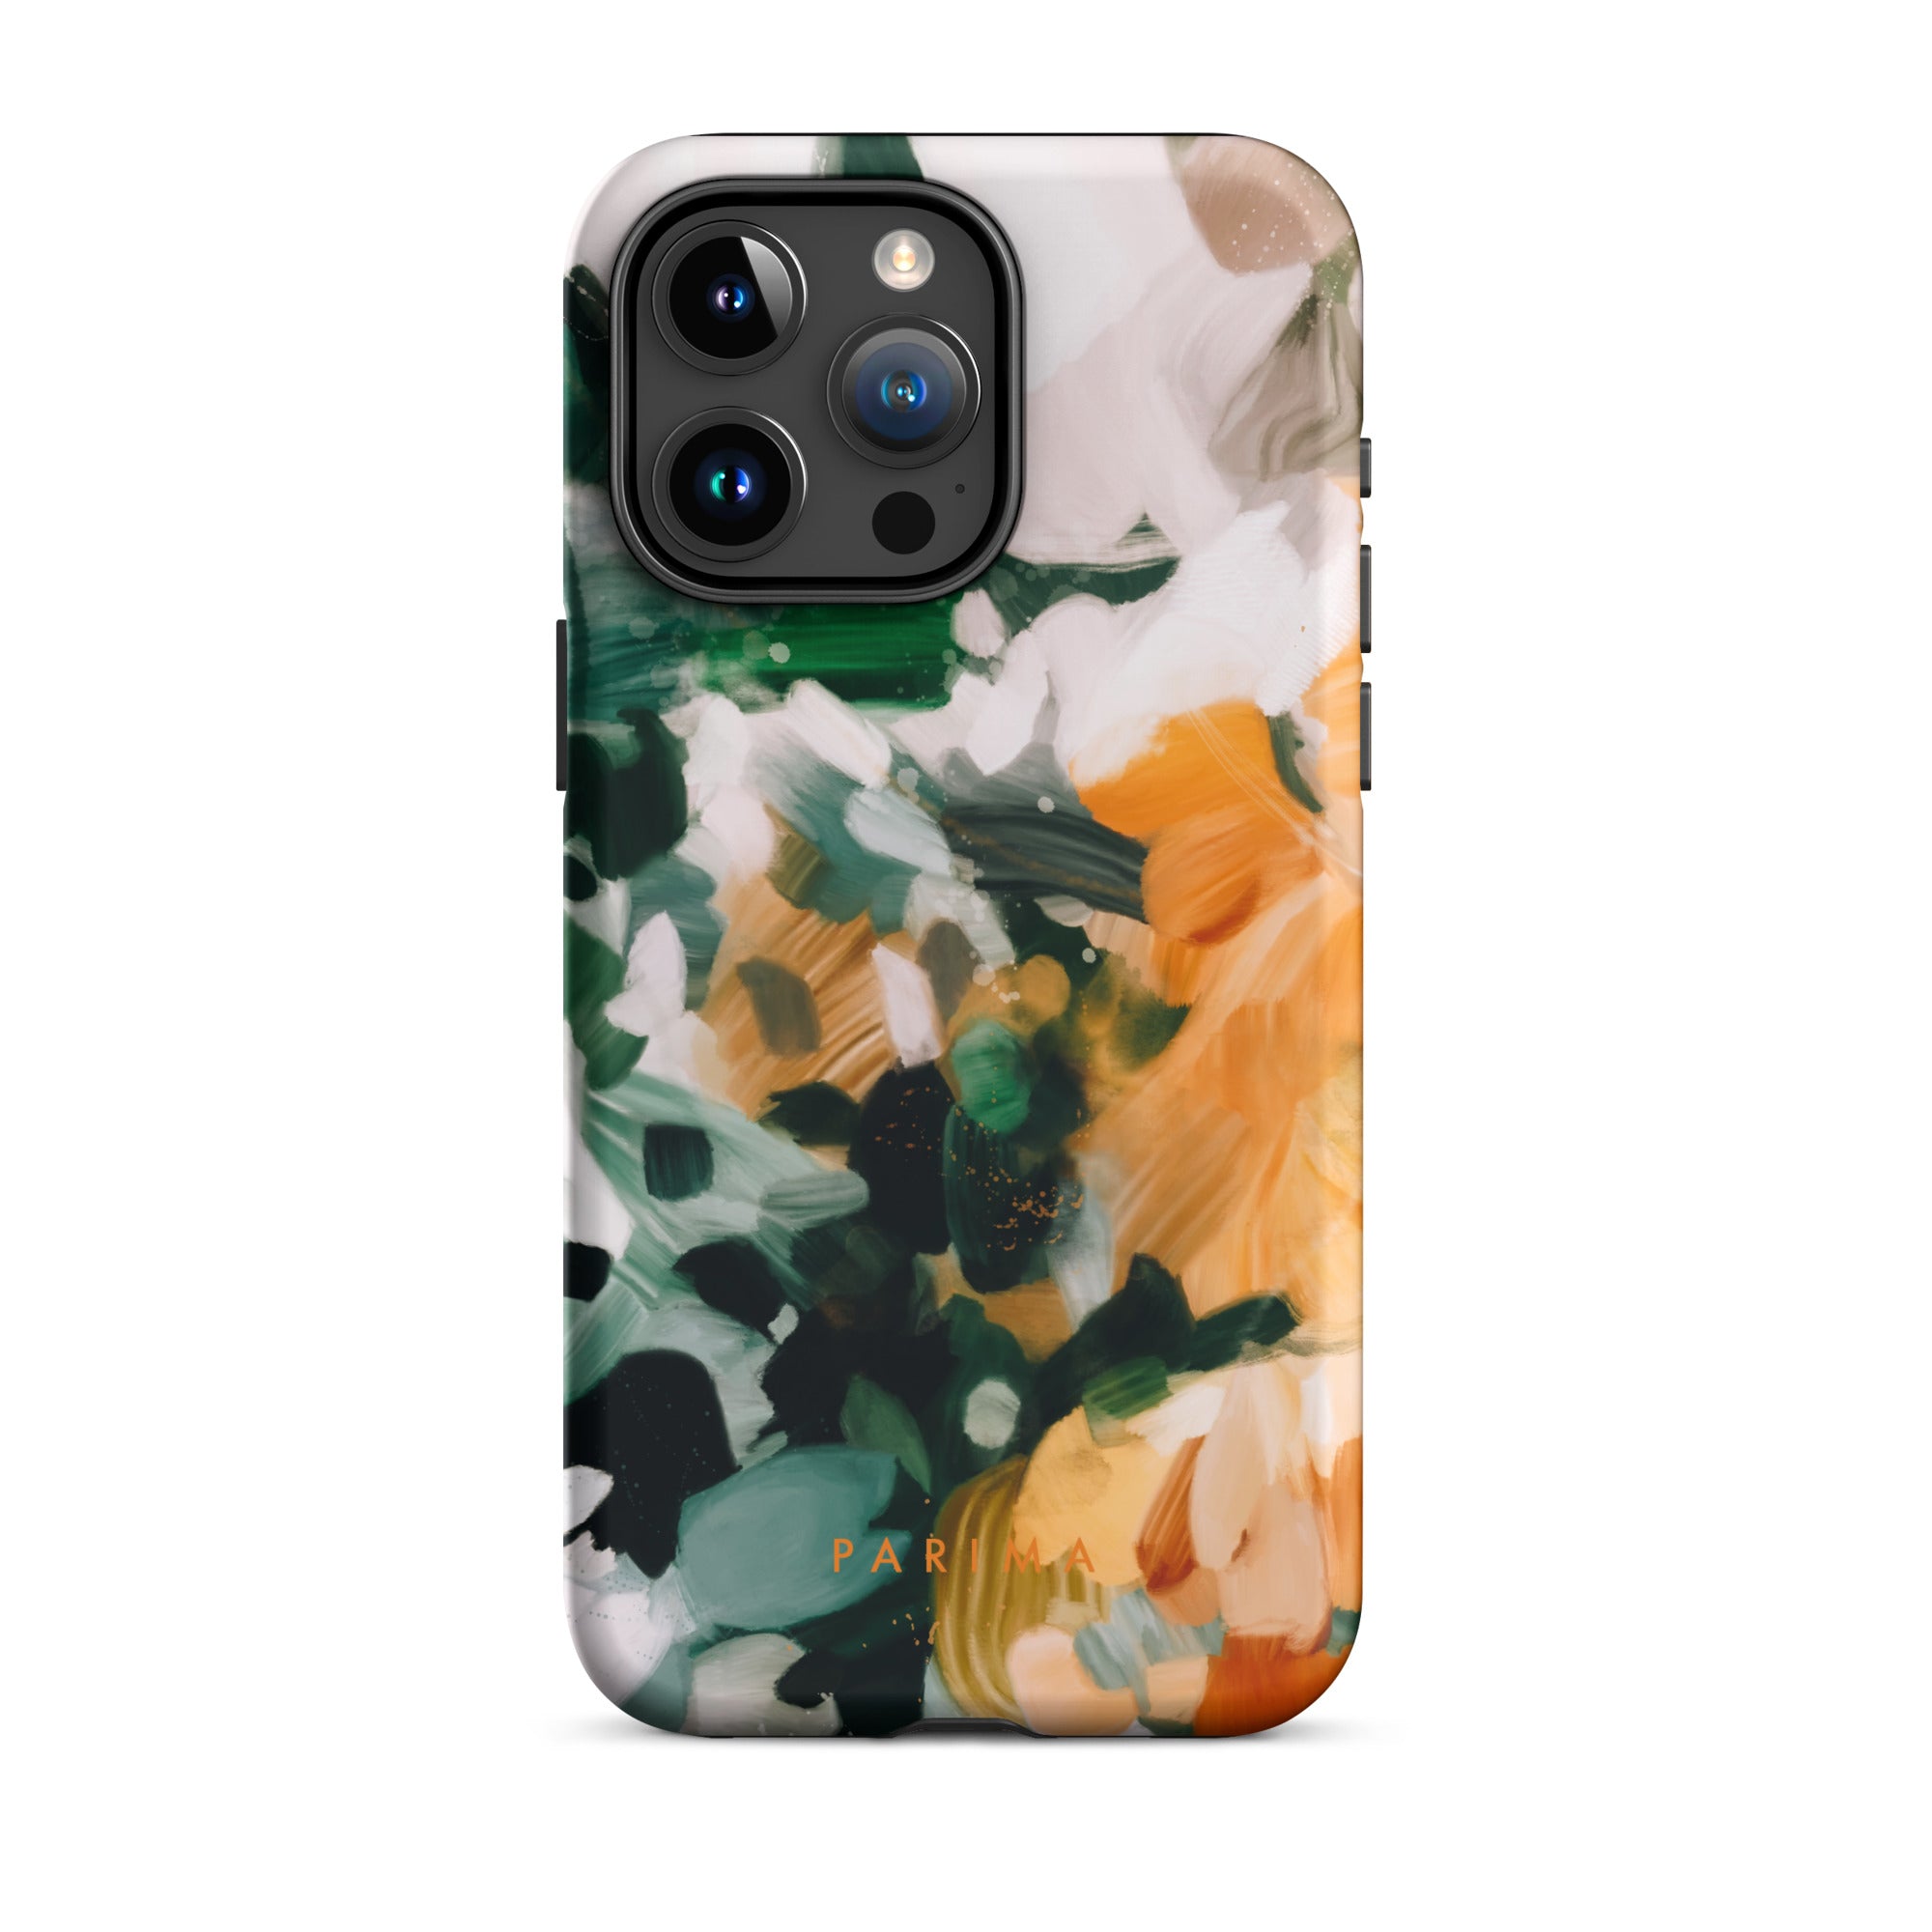 Aspen, green and orange abstract art - iPhone 15 Pro Max tough case by Parima Studio